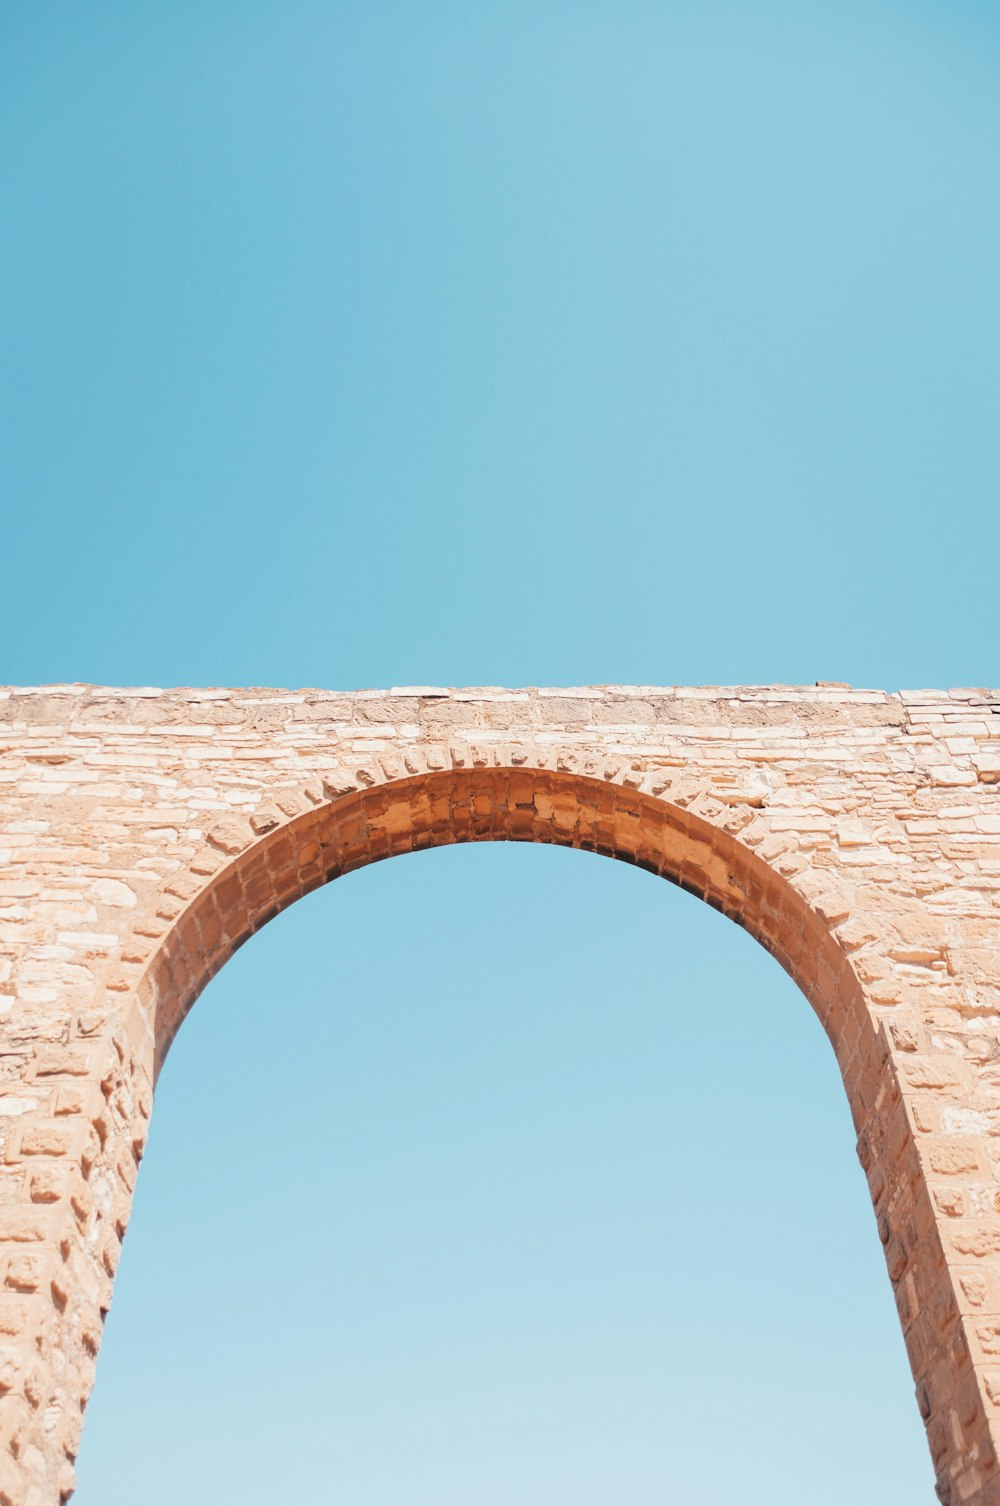 brown brick arch under blue sky during daytime